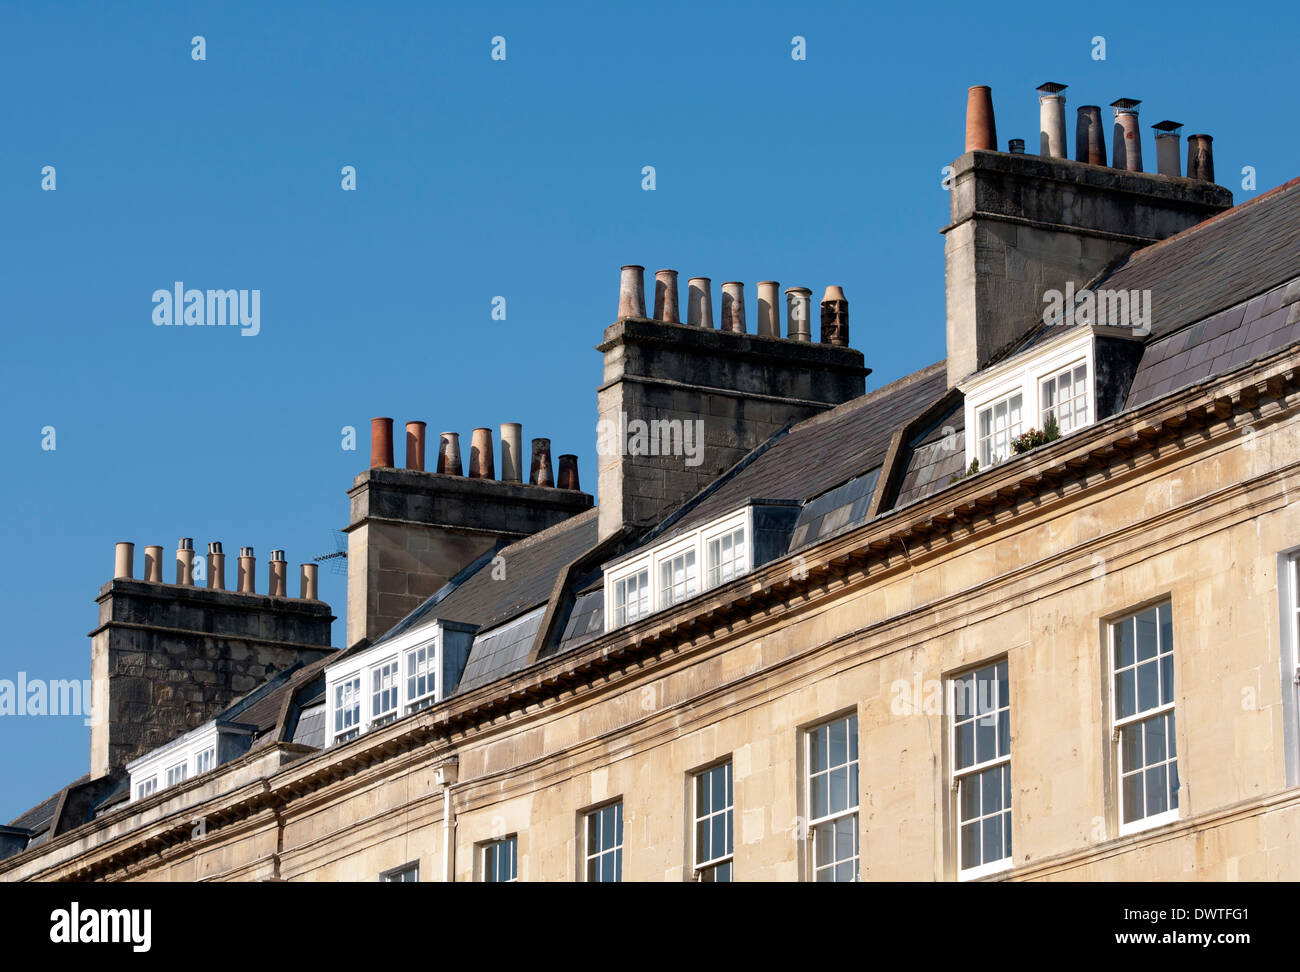 Great Pulteney Street, Bath, Somerset, England, UK Stock Photo